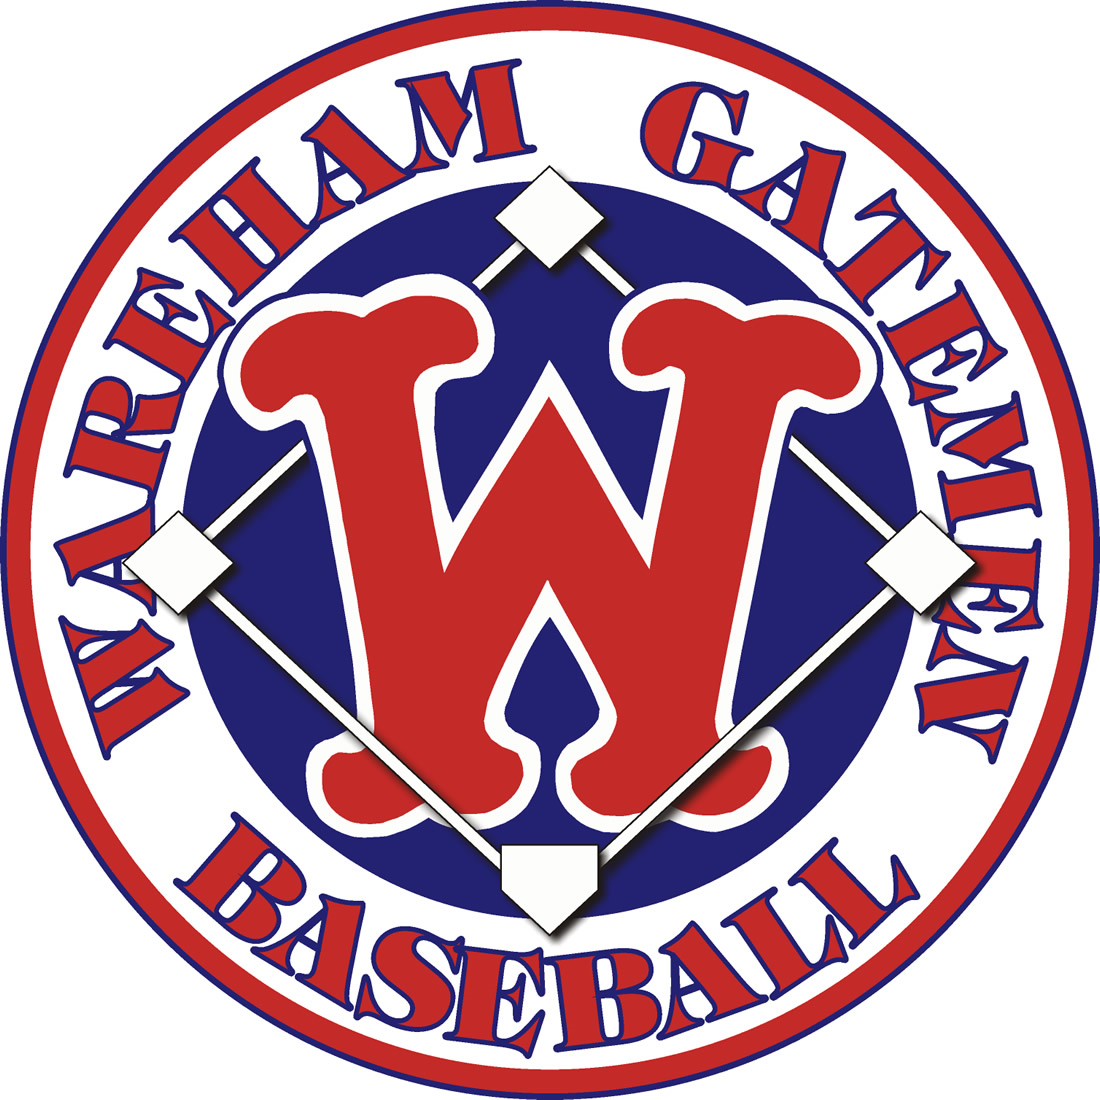 Wareham Gatemen 0-Pres Primary logo iron on transfers for clothing